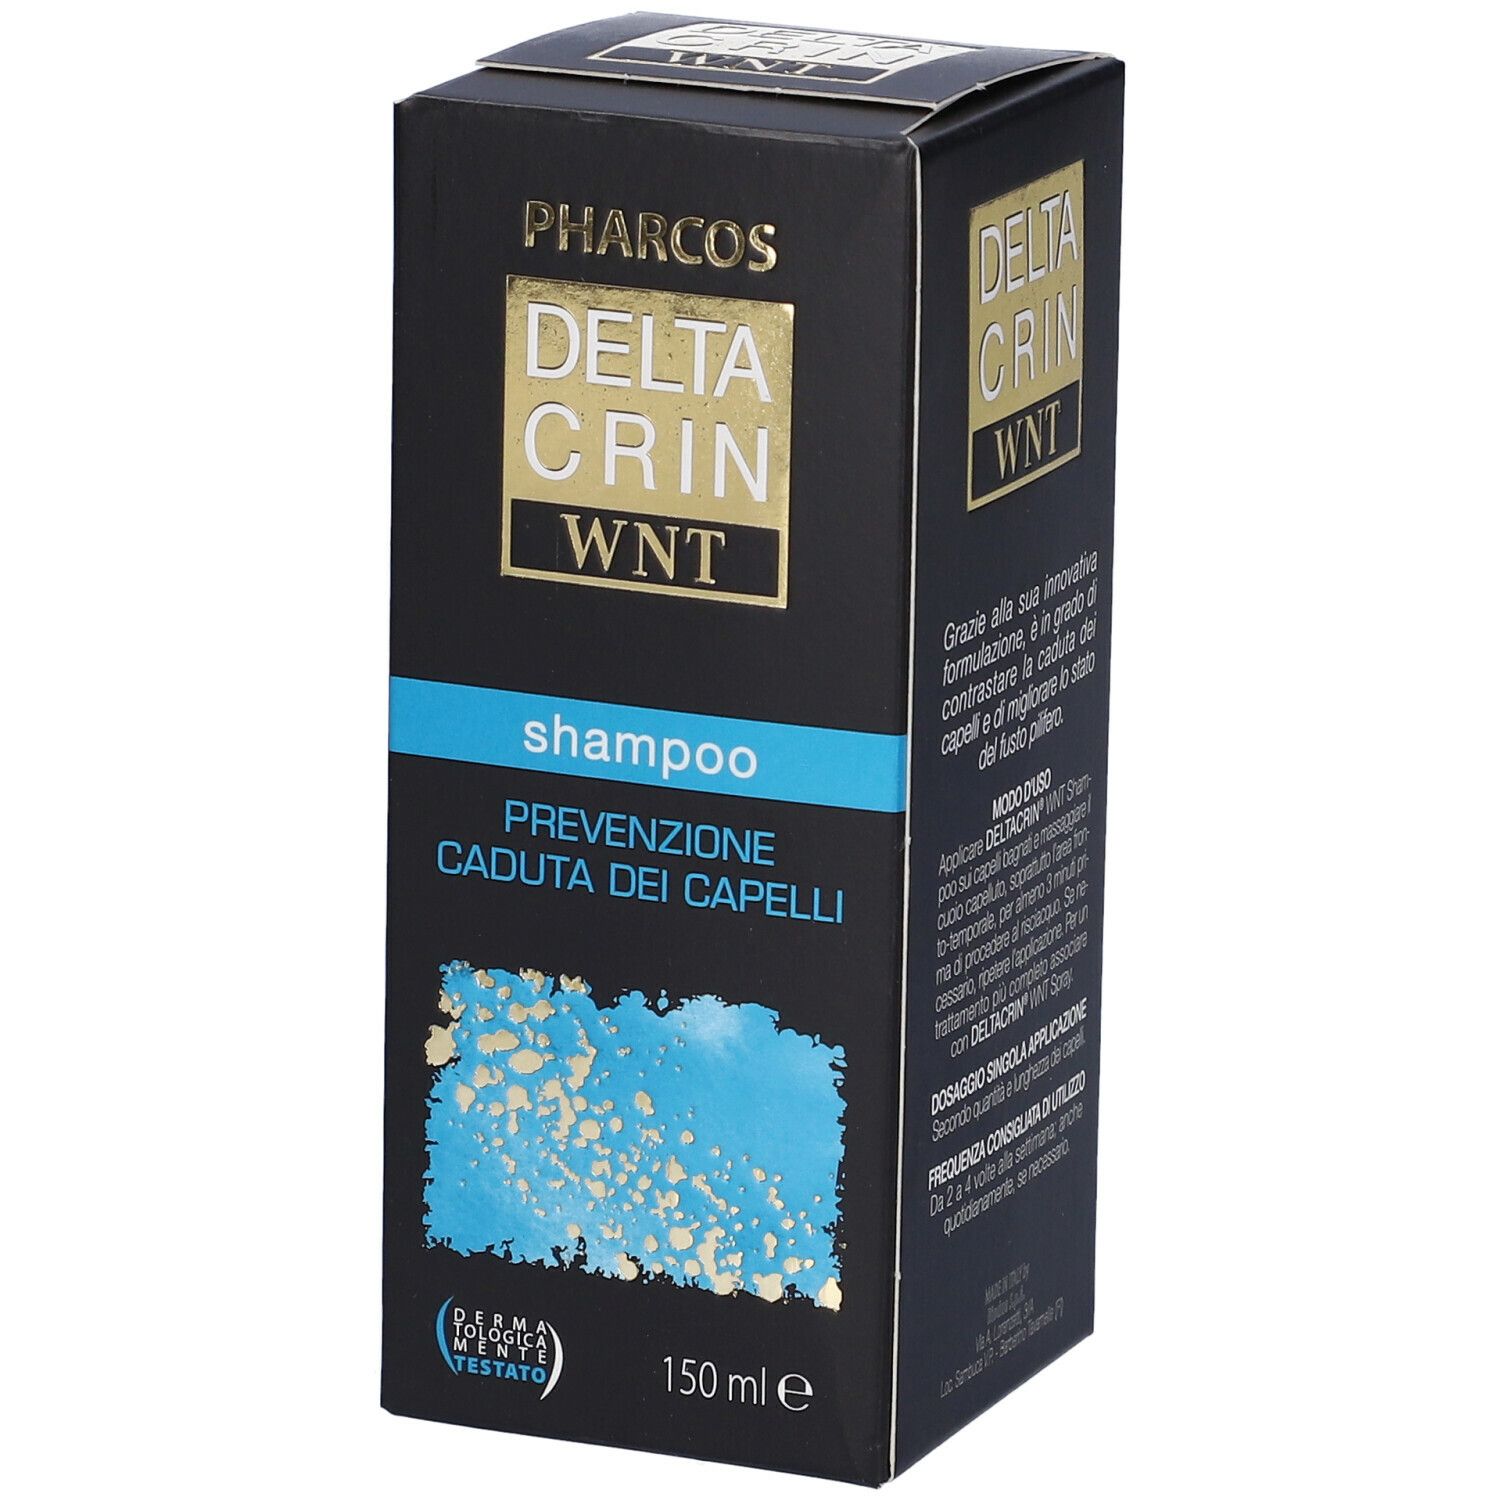 Deltacrin Wnt Shampoo Pharcos